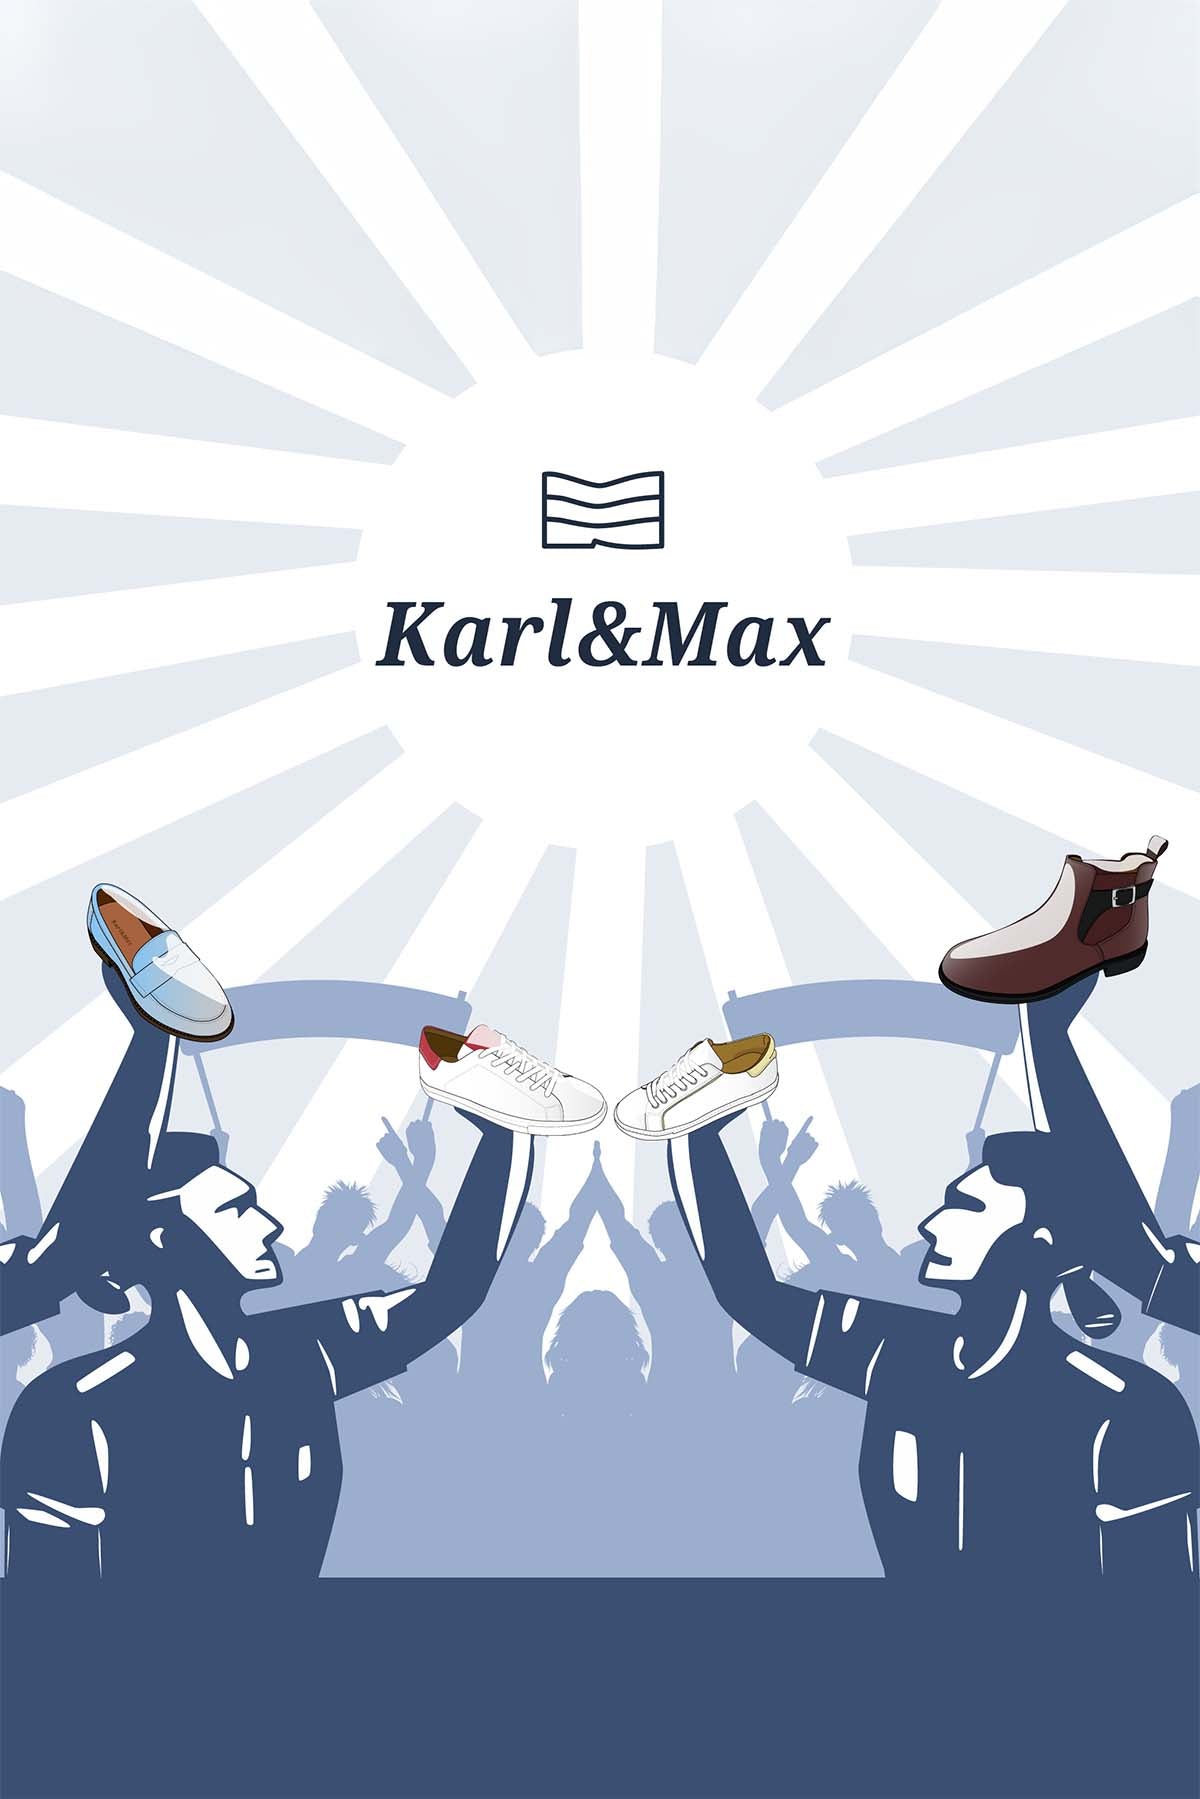 Chaussures Karl&Max manifesto